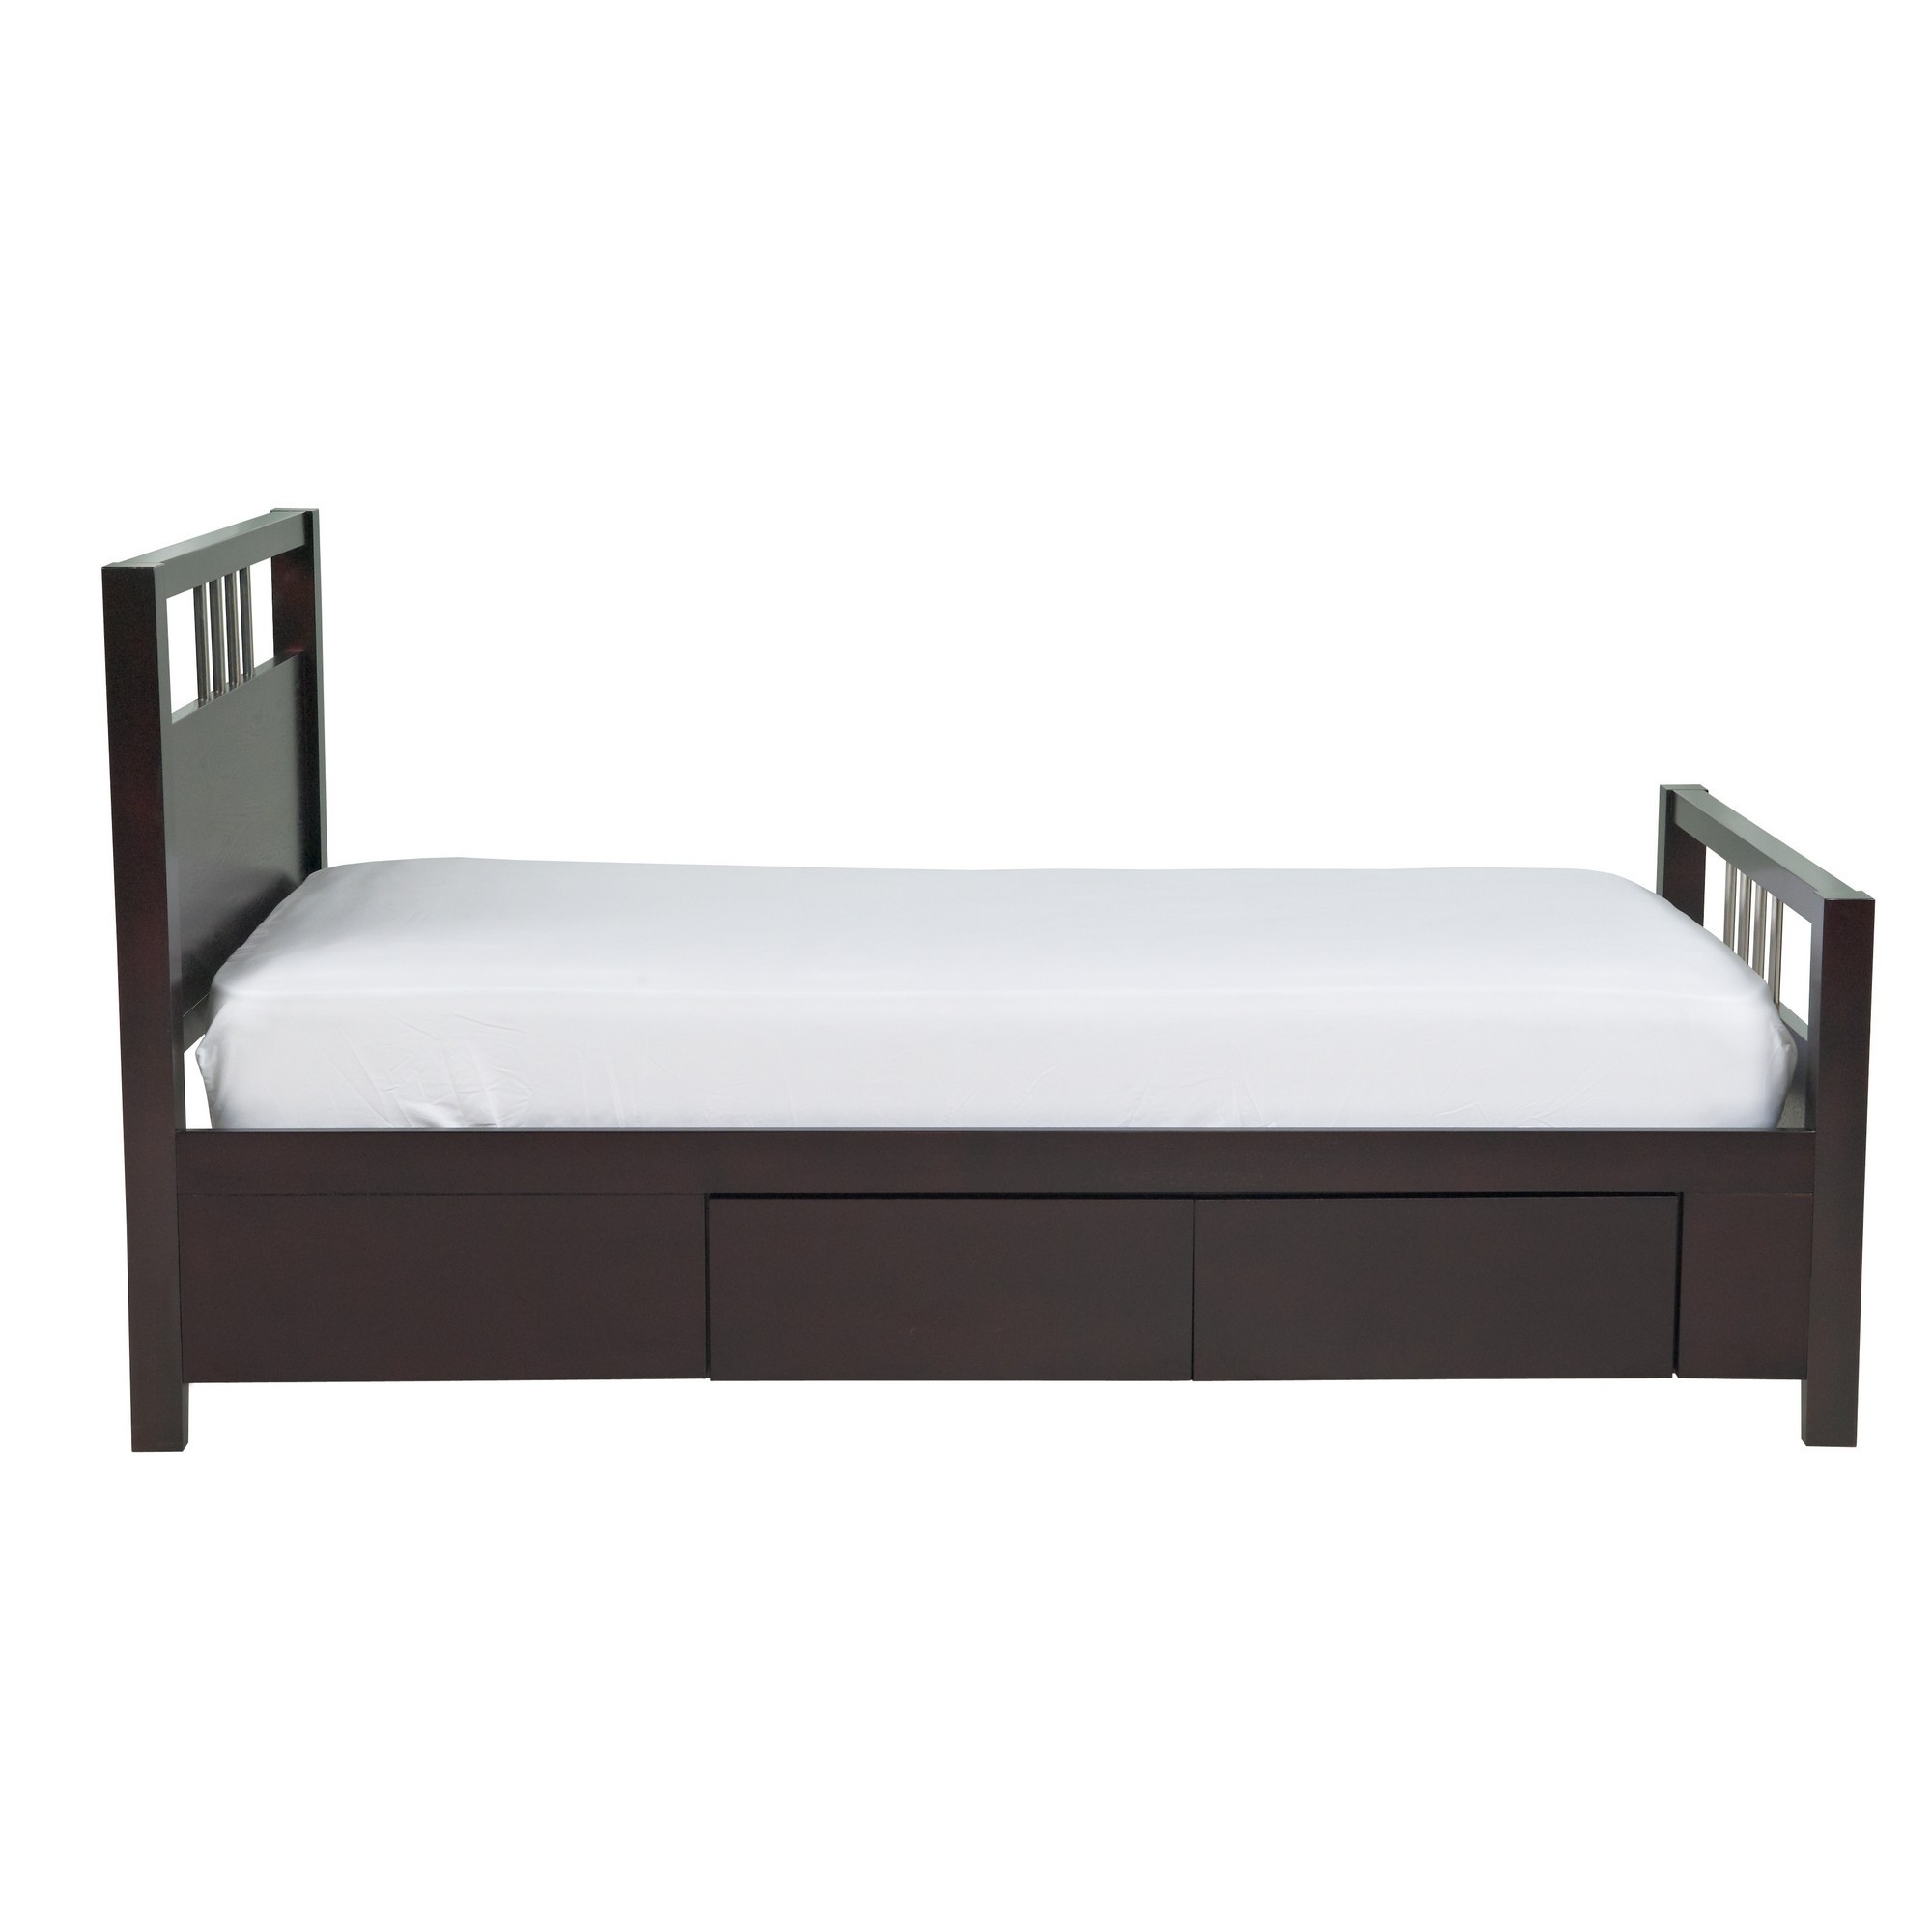 Fang Twin Size Storage Bed, Sleigh Headboard, 4 Drawers, Espresso Brown - Saltoro Sherpi